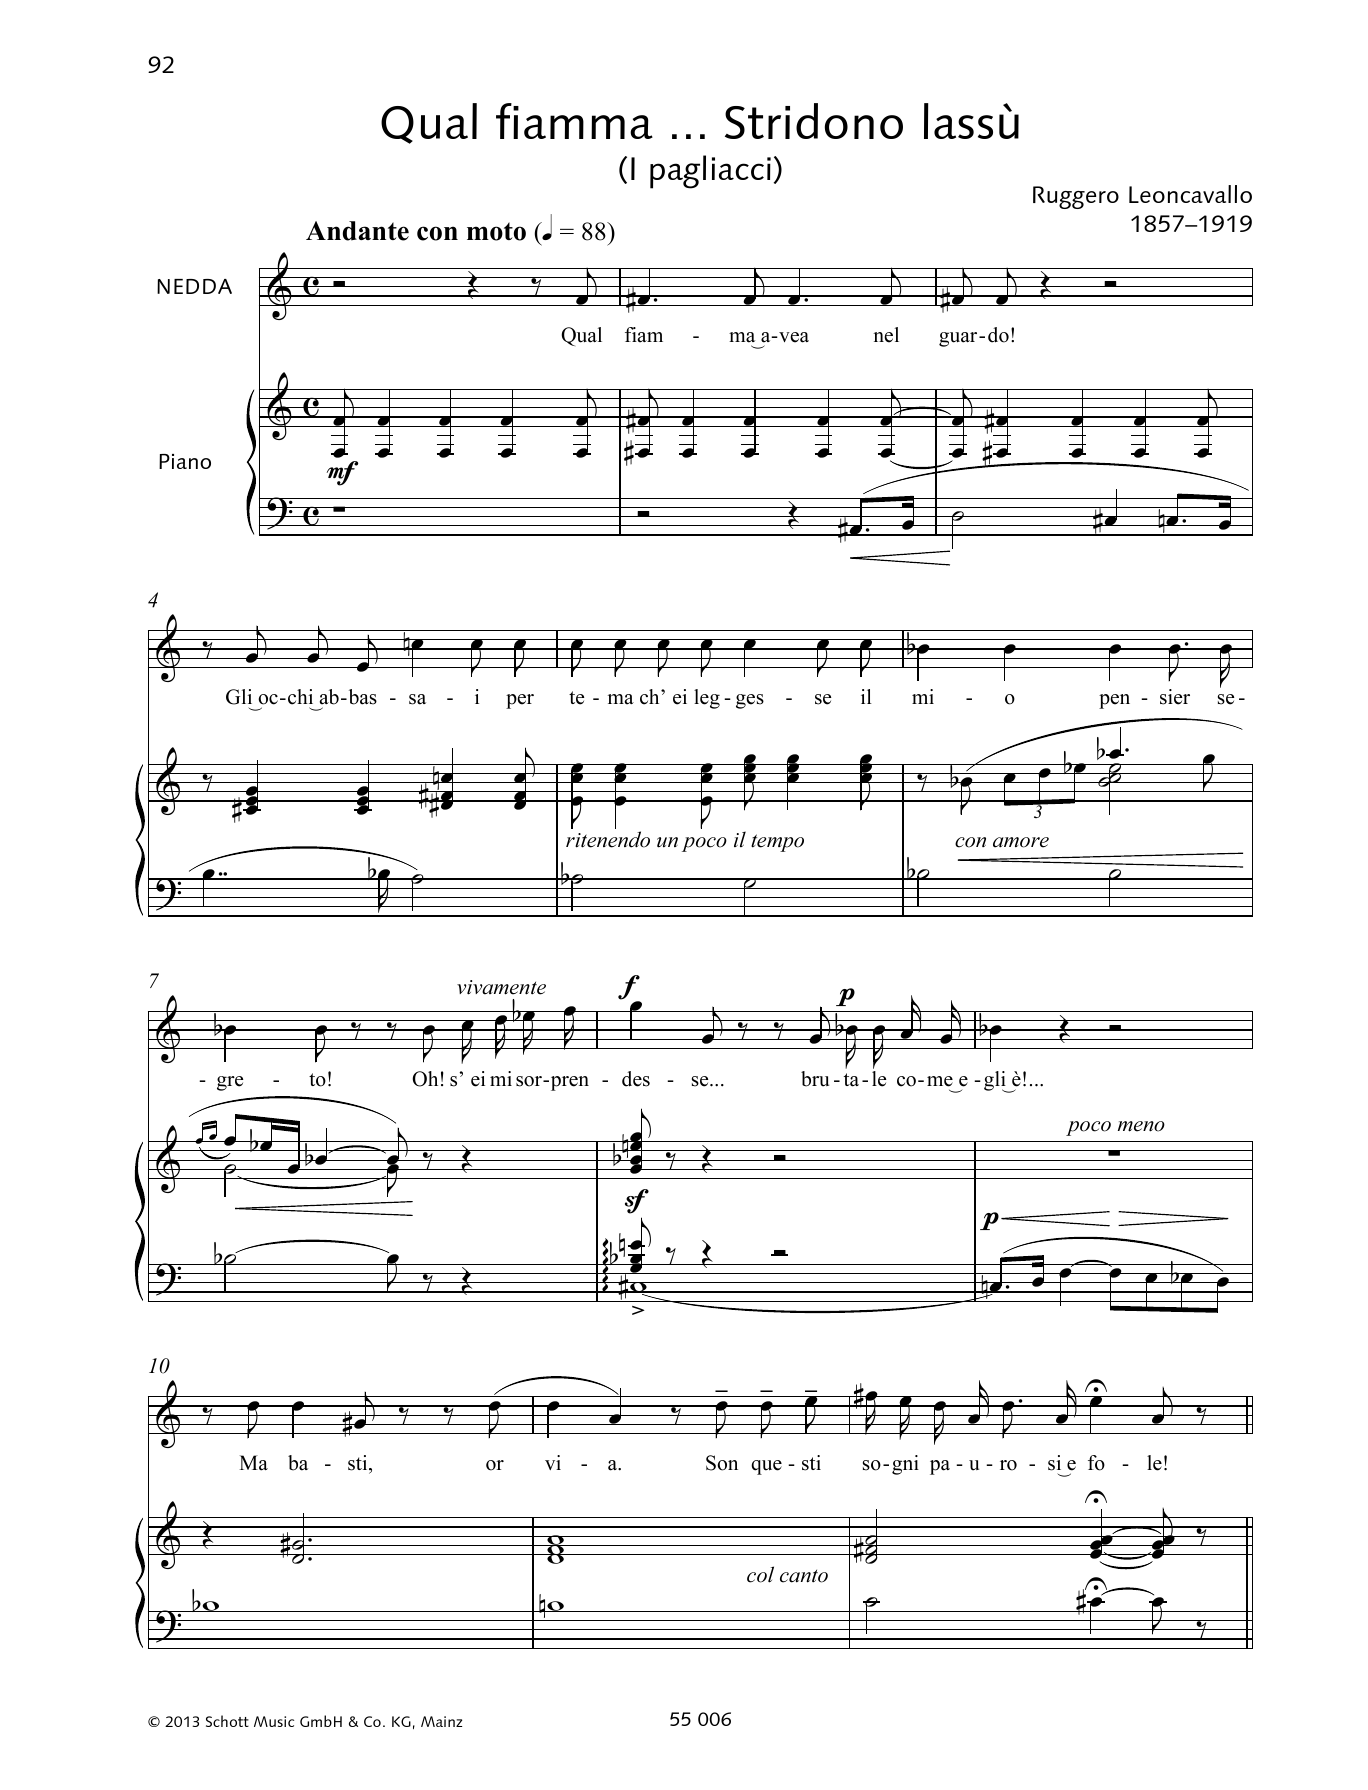 Download Francesca Licciarda Qual fiamma ... Stridono lassù Sheet Music and learn how to play Piano & Vocal PDF digital score in minutes